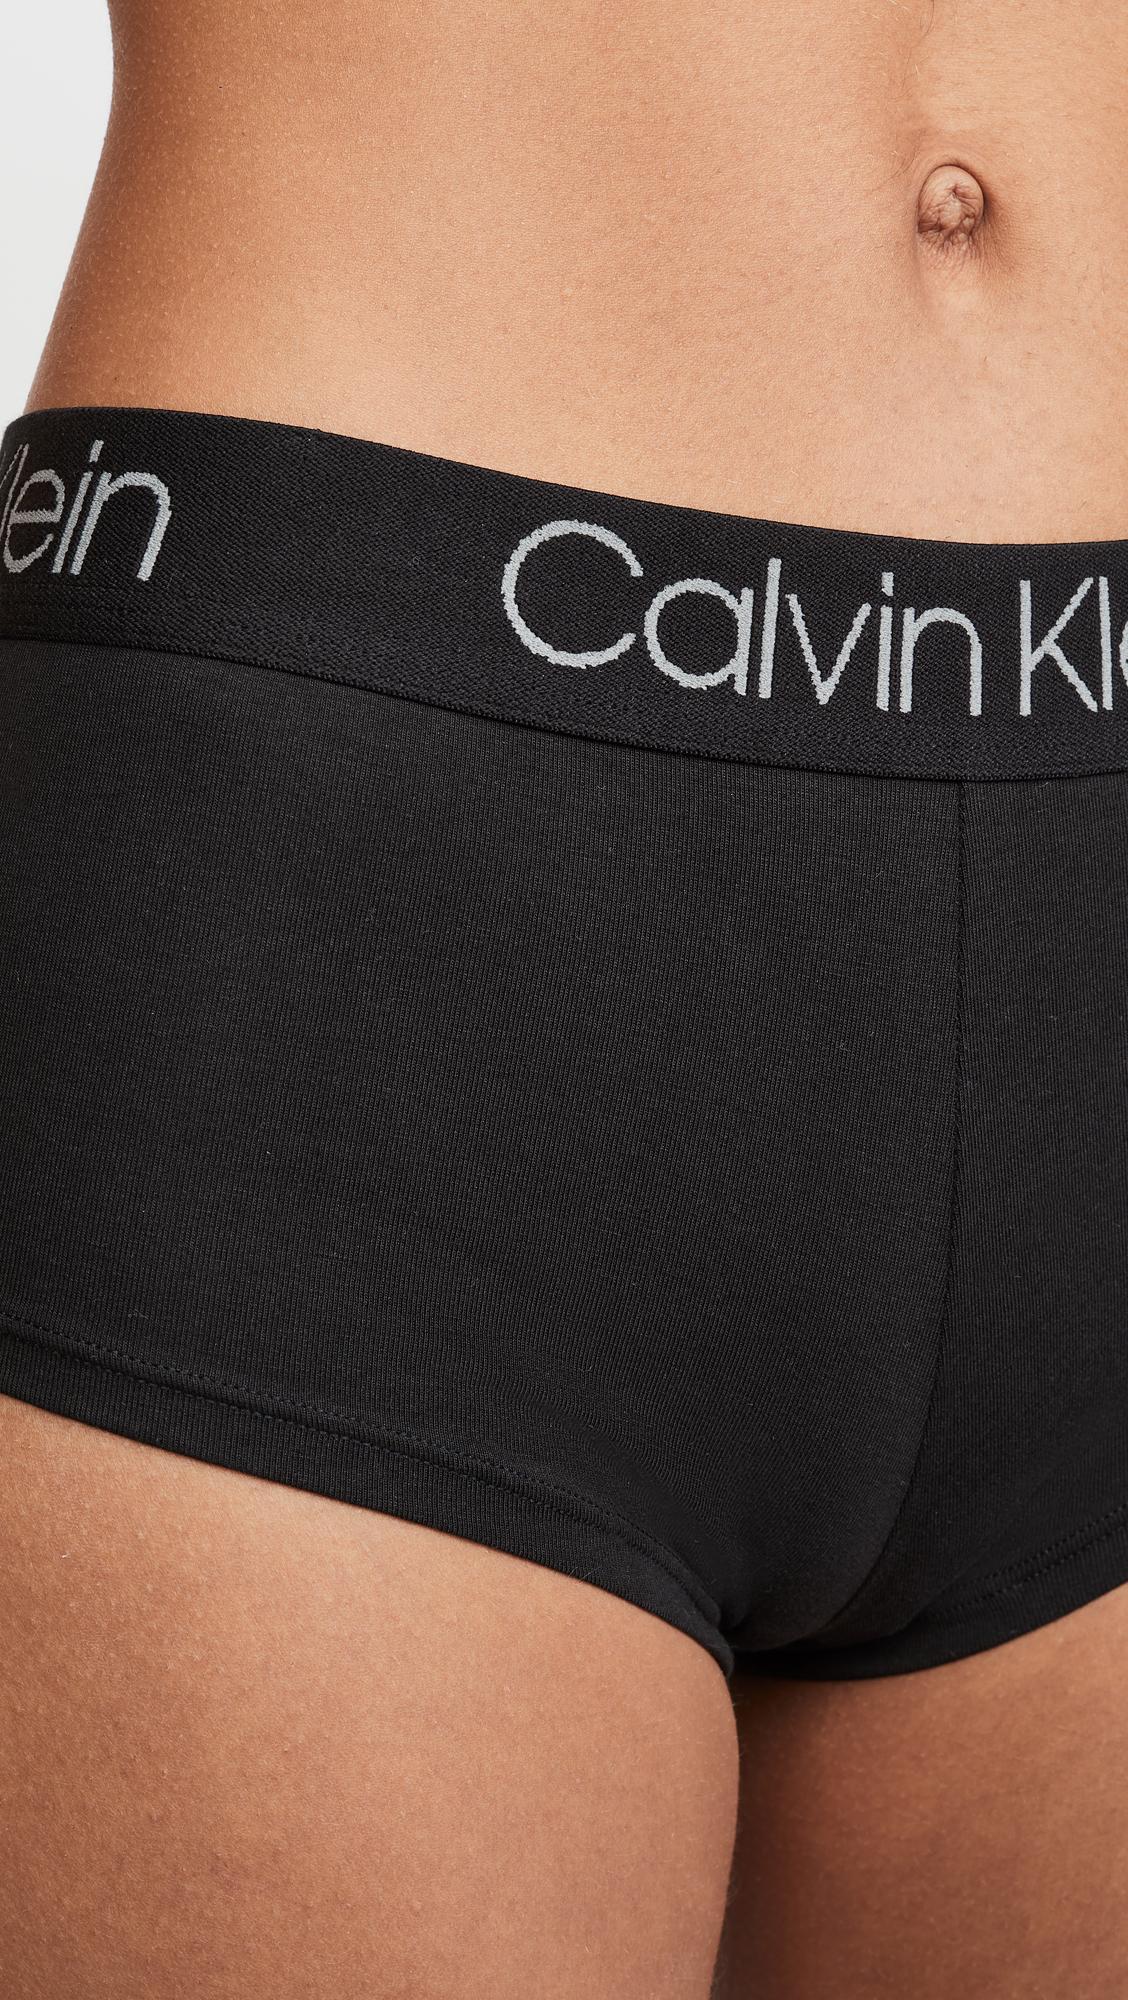 Calvin Klein Body Multipants Boyshorts Underwear Qd3753 in Black | Lyst